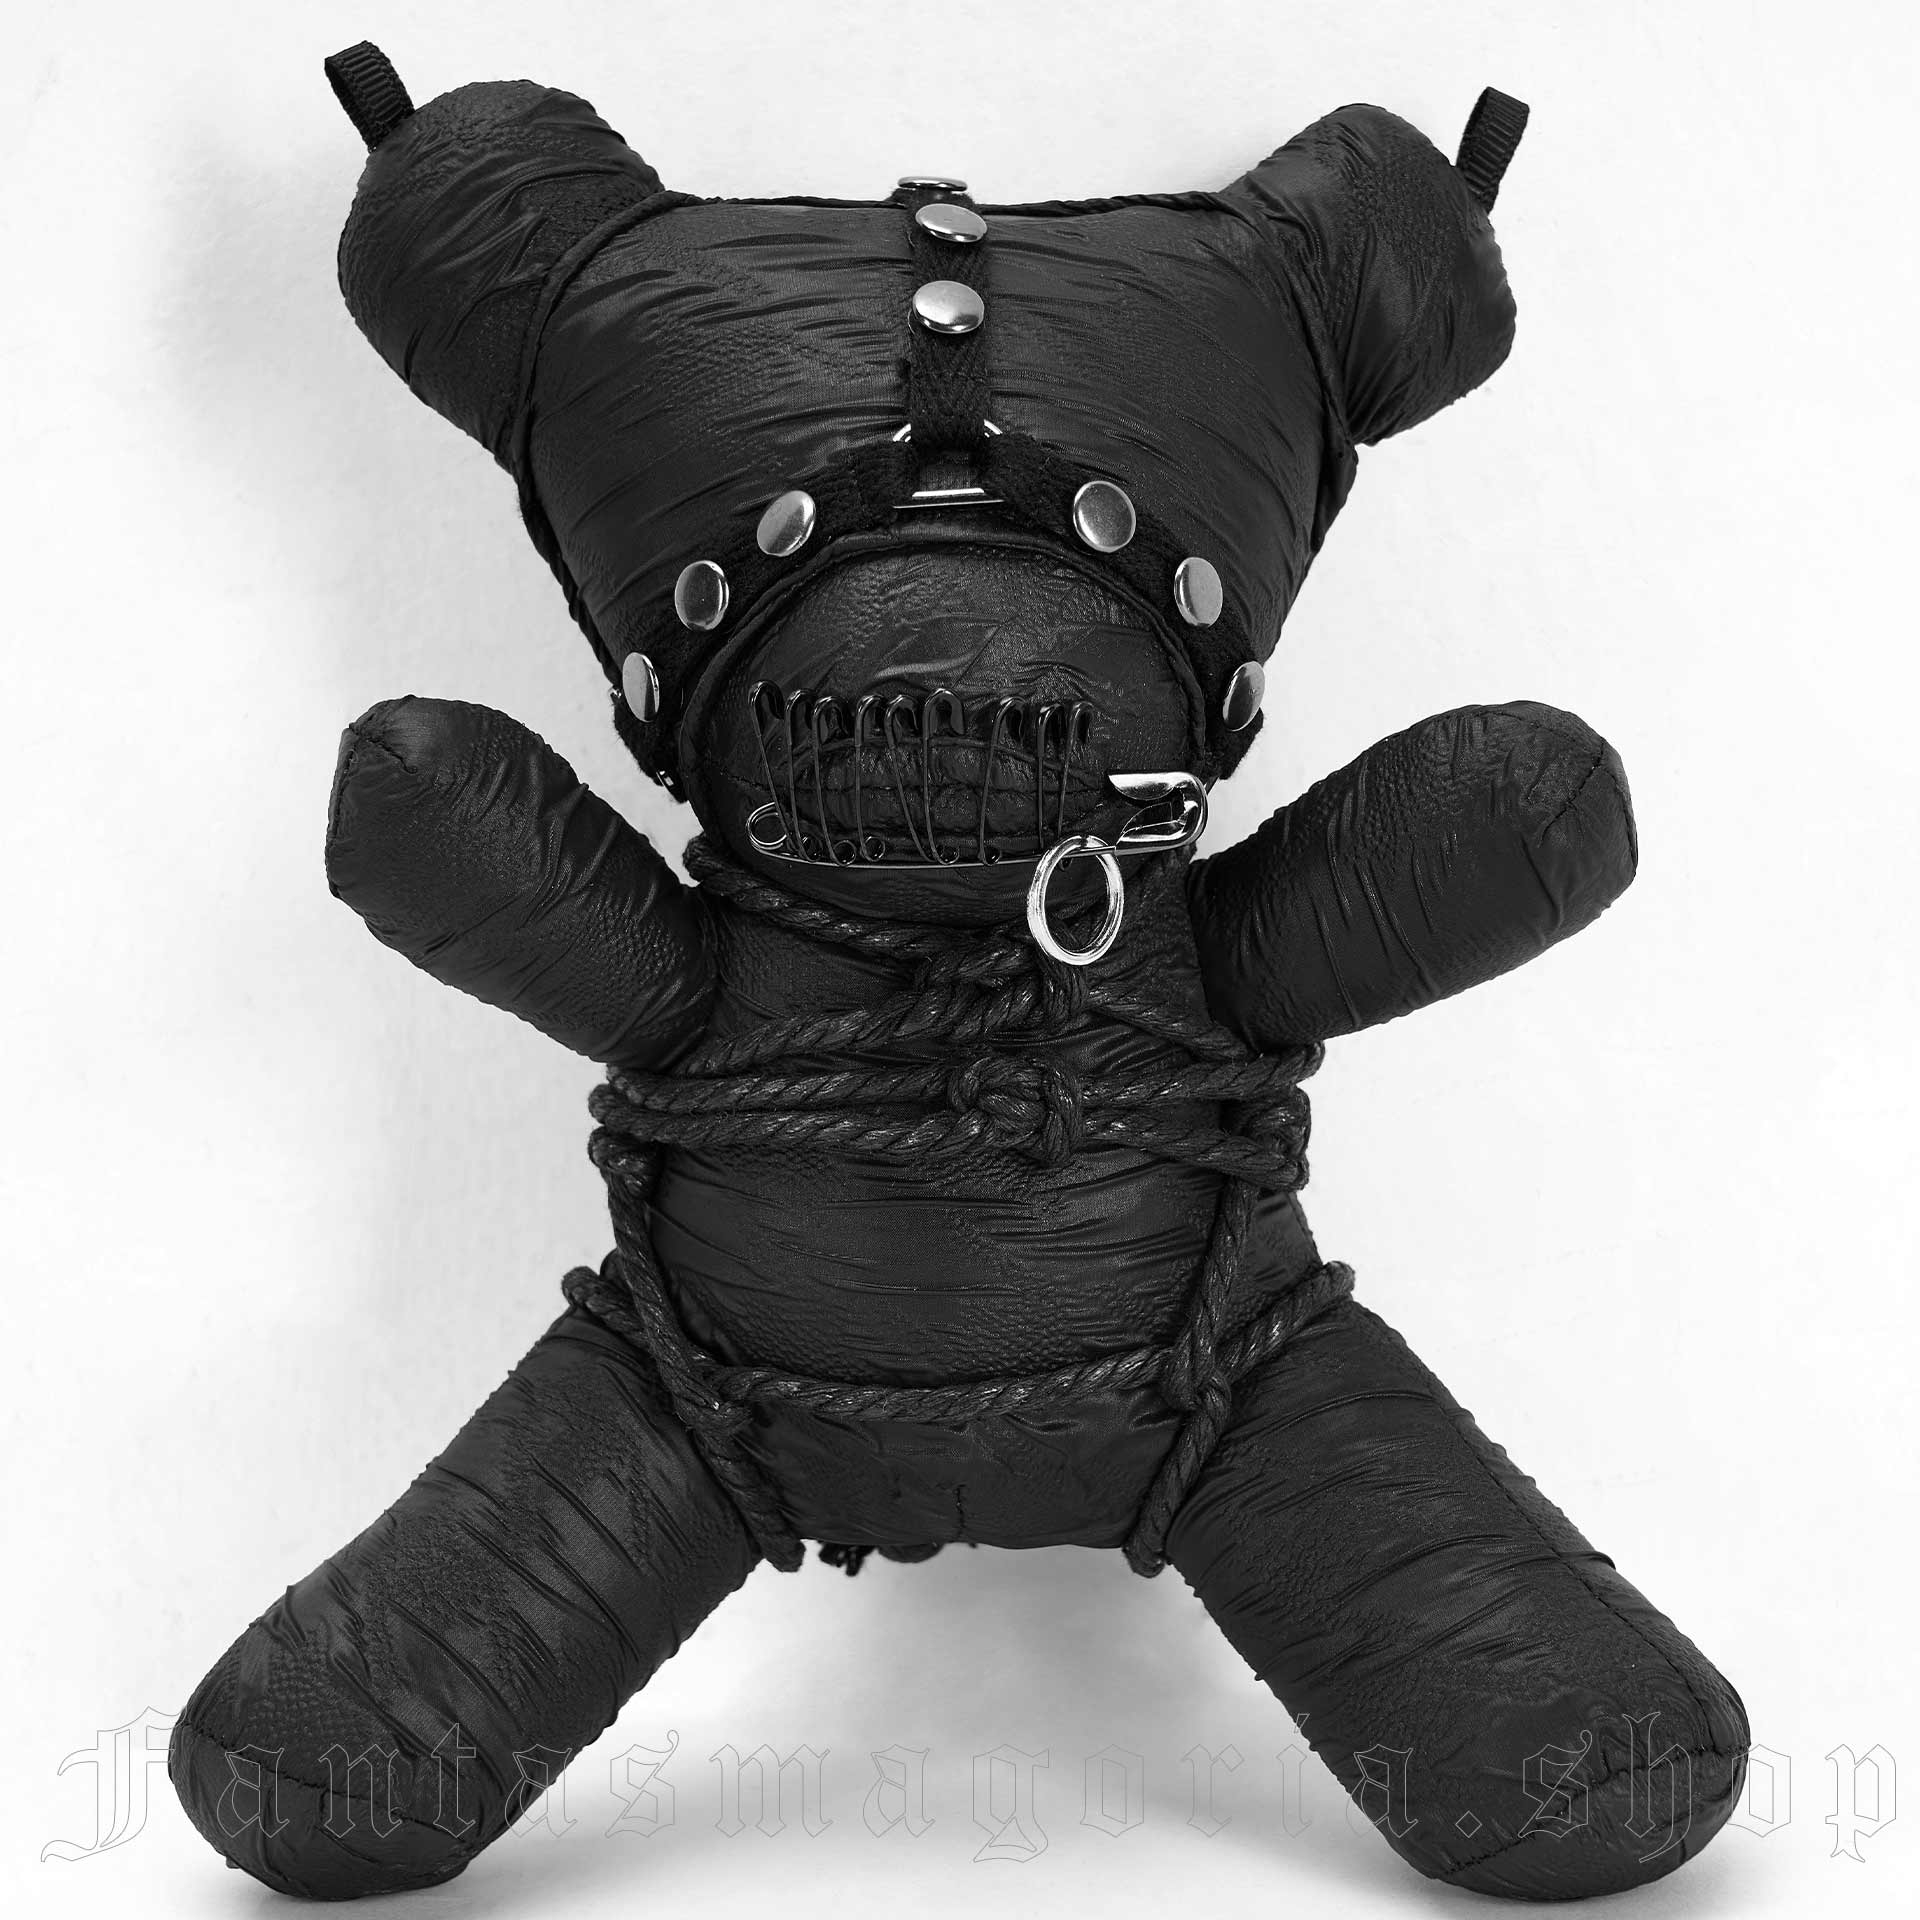 Creepycute Kawaii Gasmask Teddy Bear Bunny Plush Toy Keychain